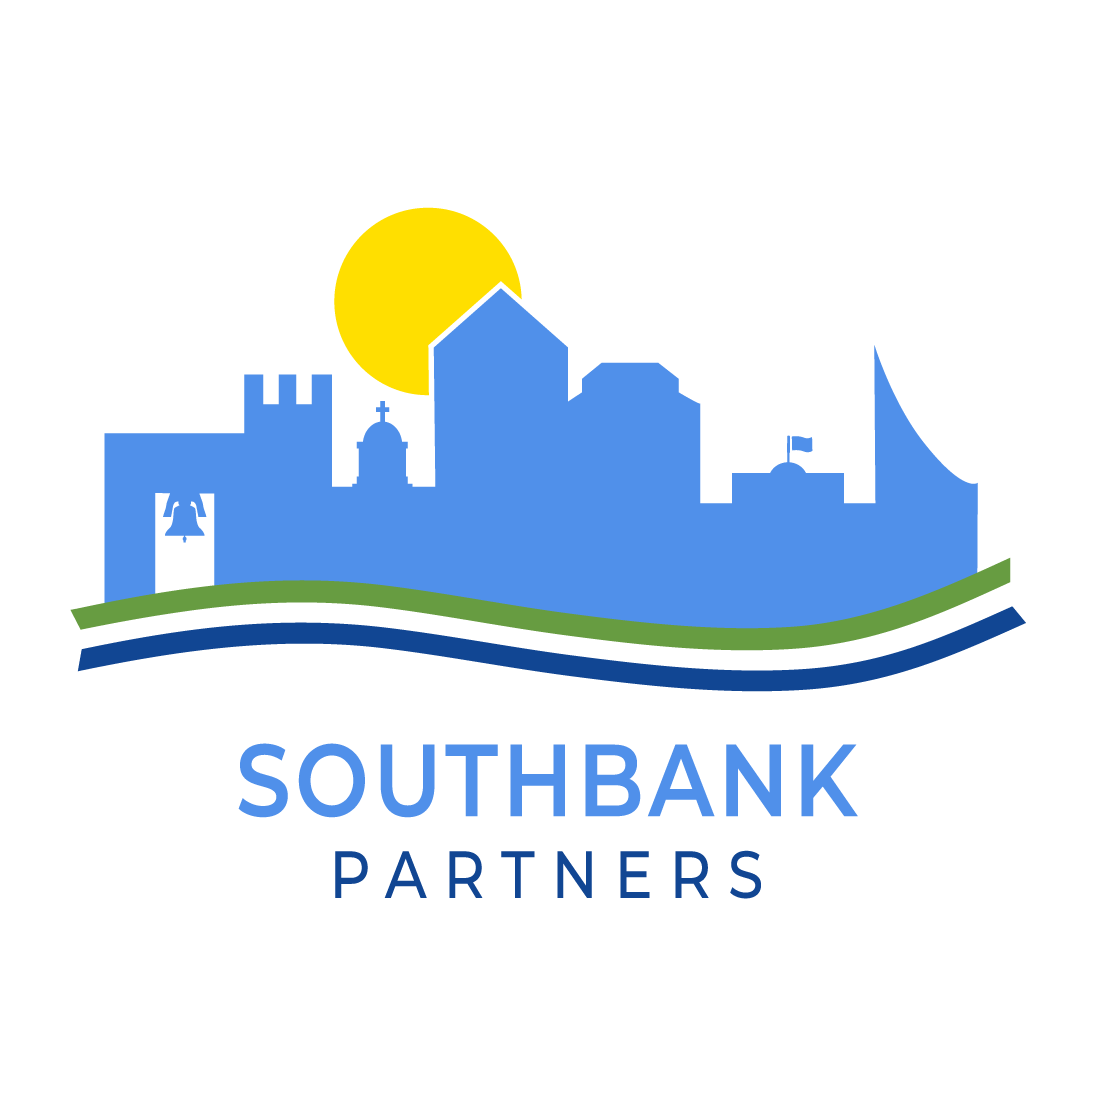 SOUTHBANK PARTNERS logo